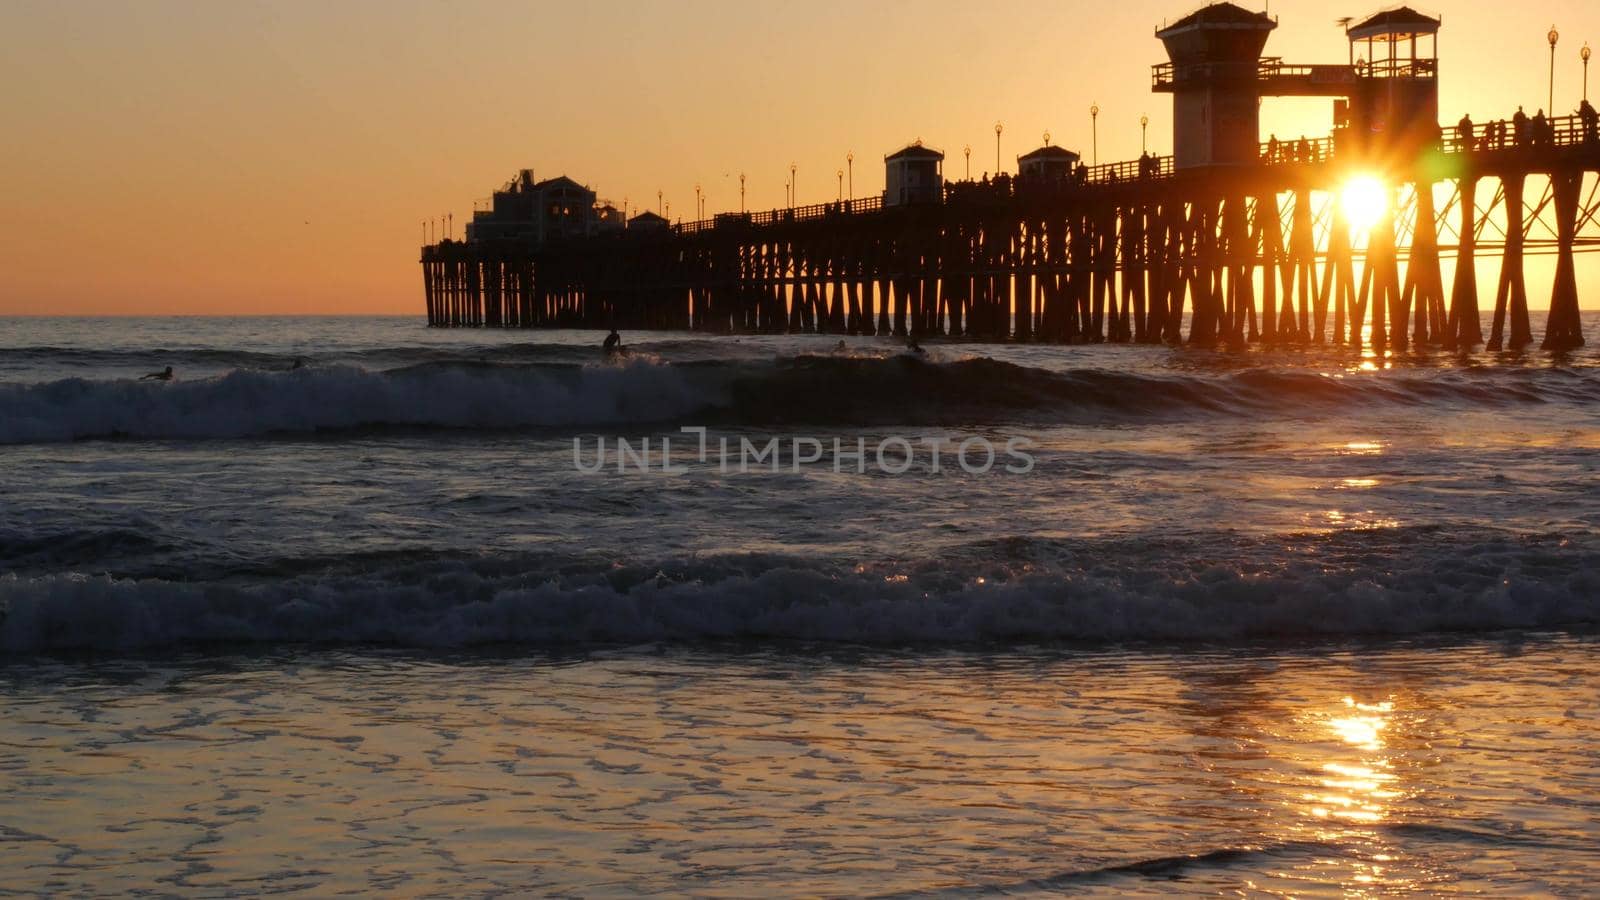 Surfer silhouette, pacific ocean beach sunset. People enjoy surfing. Oceanside, California USA by DogoraSun